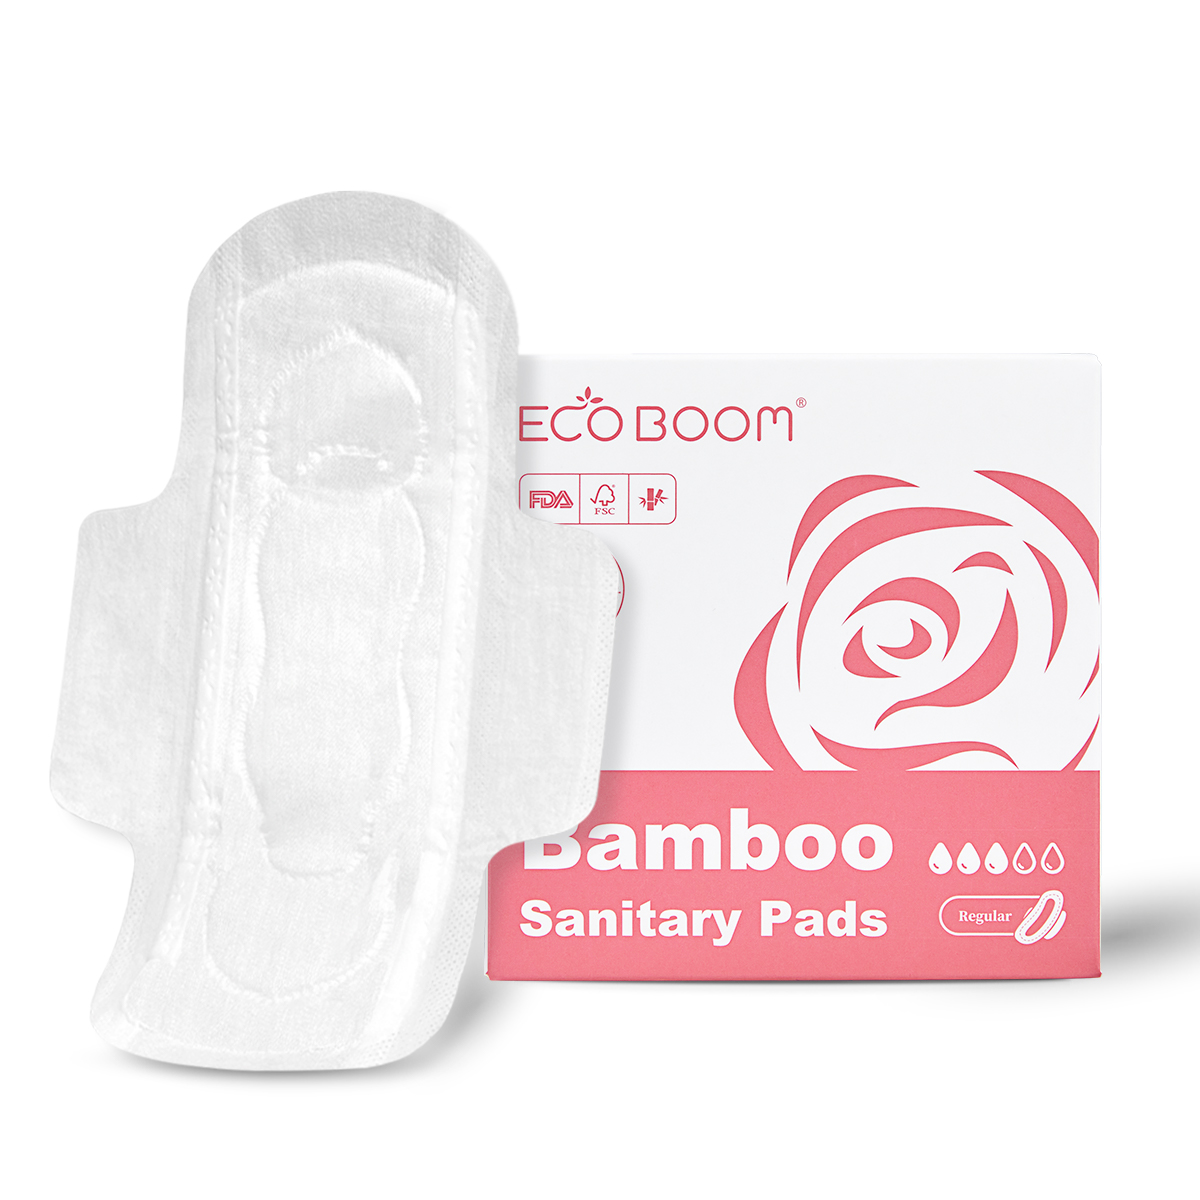 ECO BOOM bamboo menstrual pads wholesale distributors-2